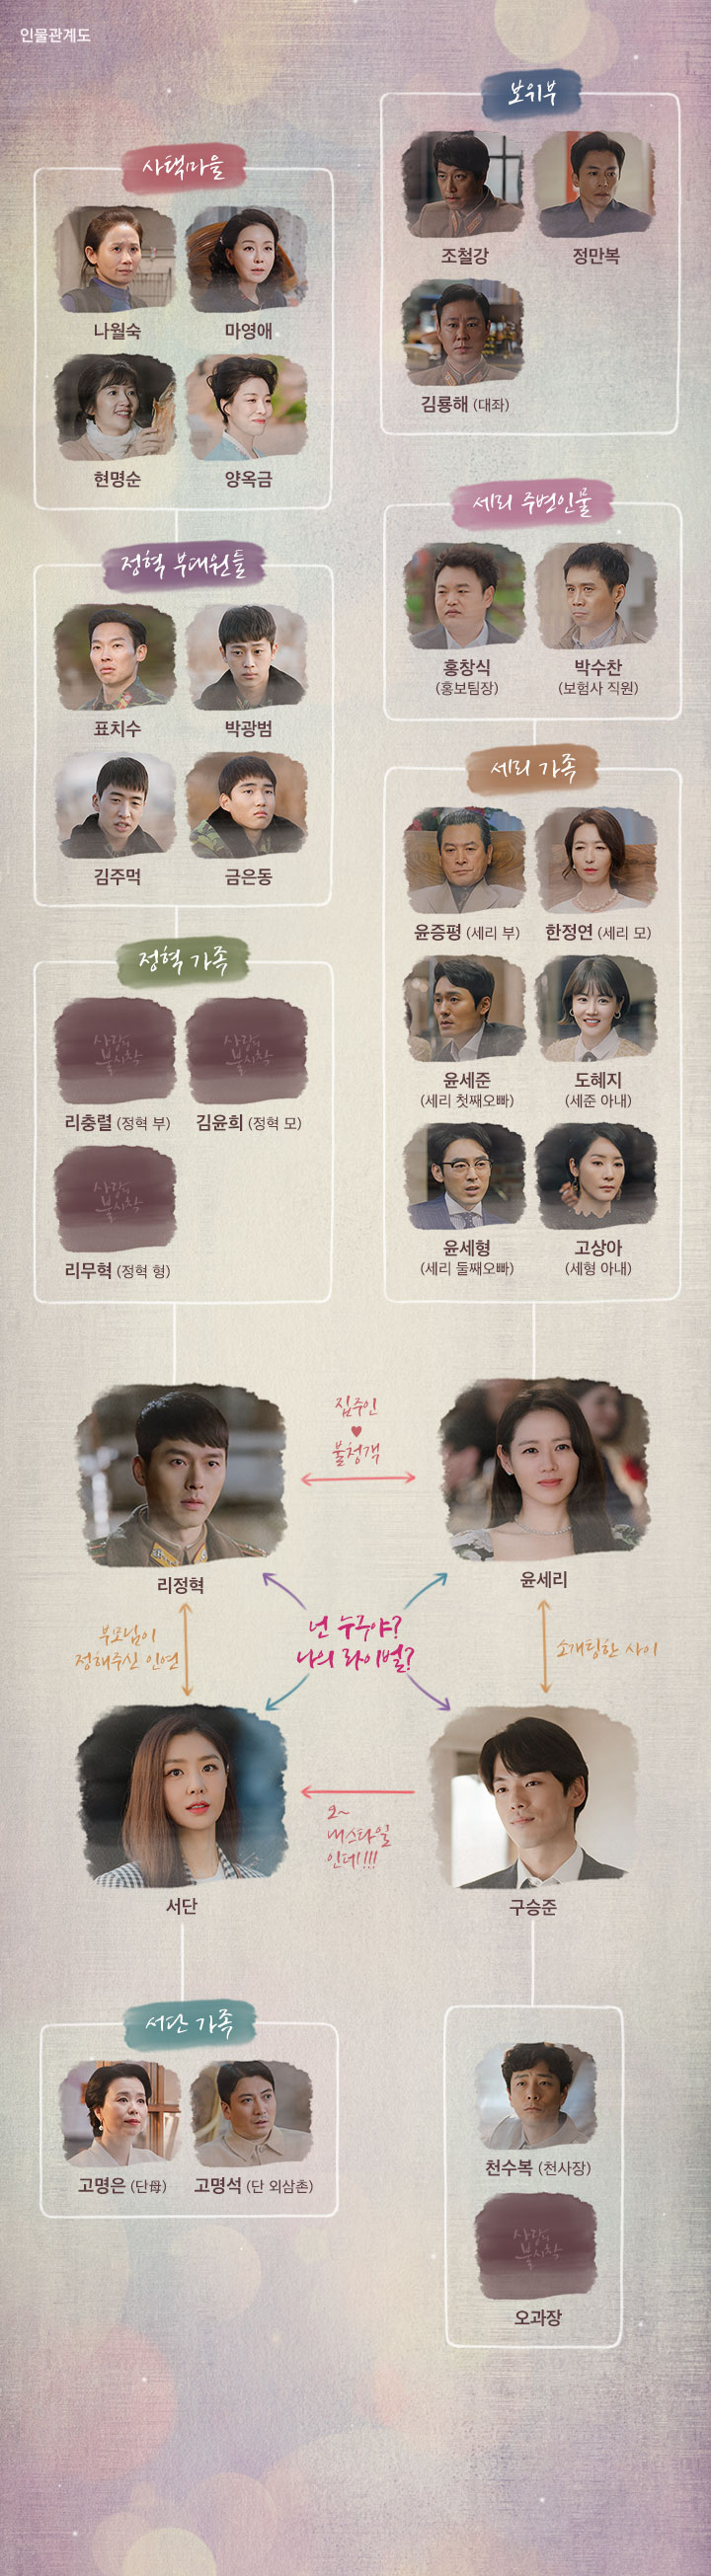 tvN‘사랑의 불시착’ 홈페이지 인물관계도 사진캡처